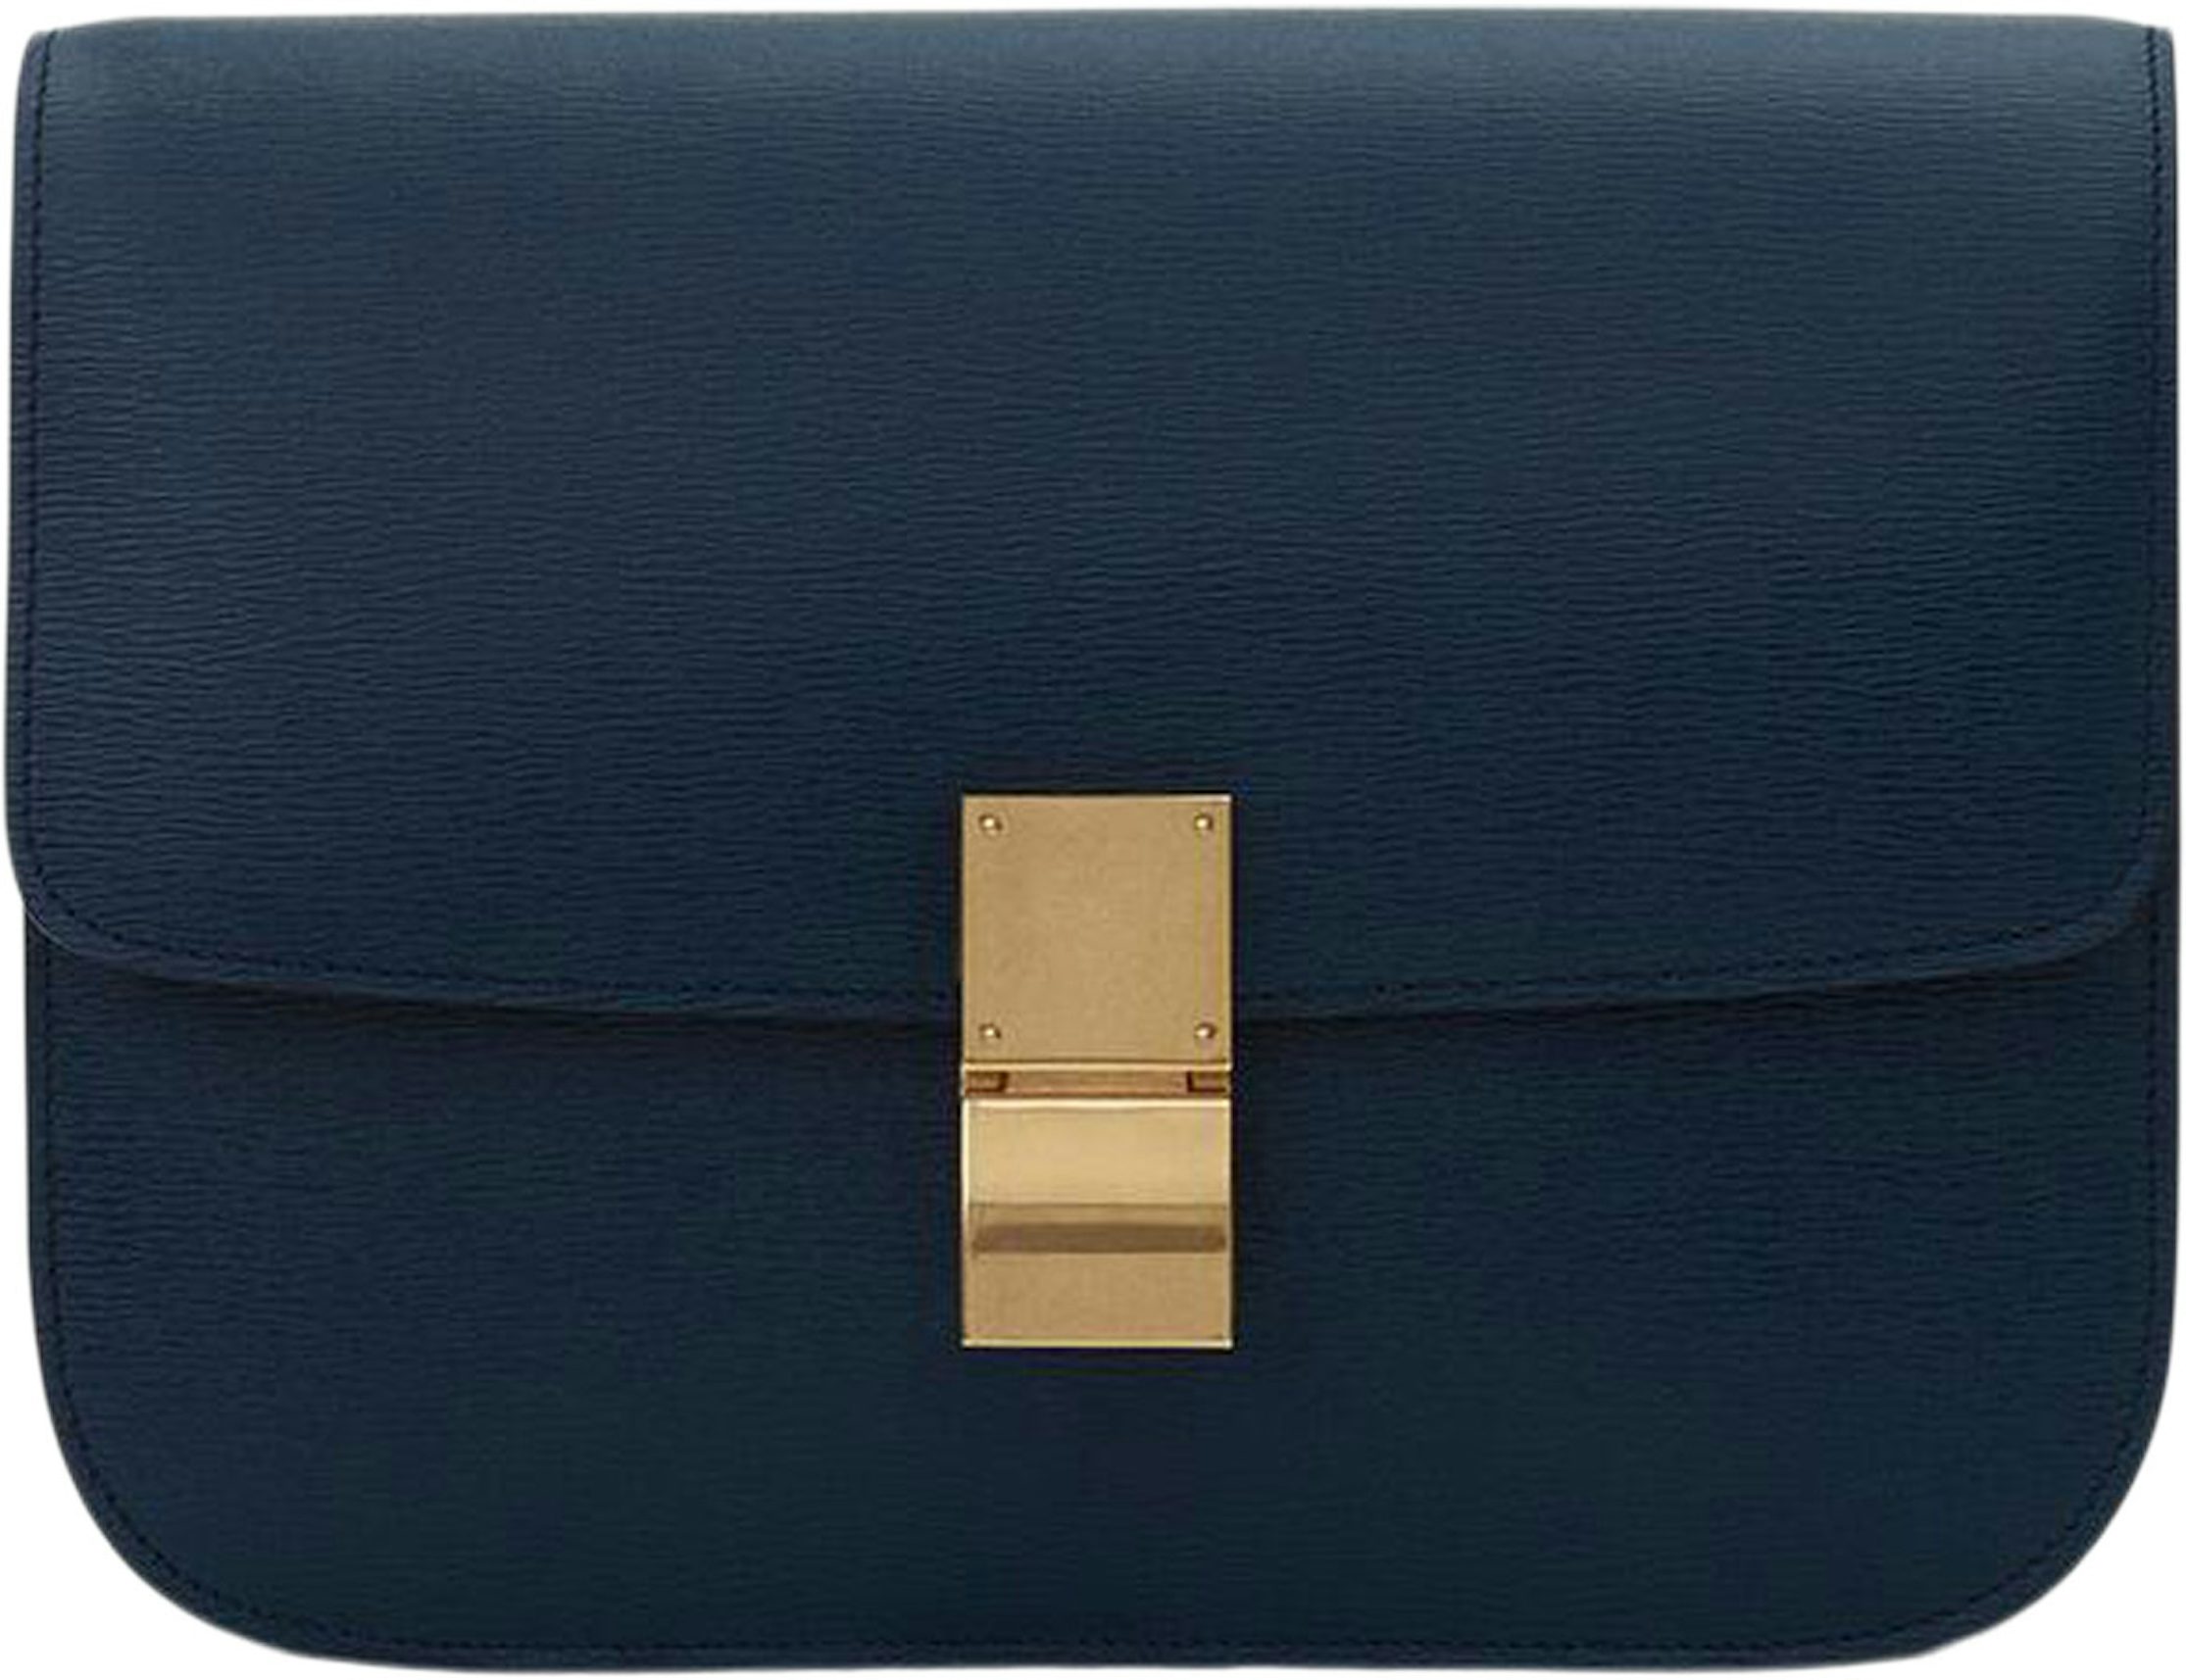 CELINE Classic Box Leather Shoulder Bag